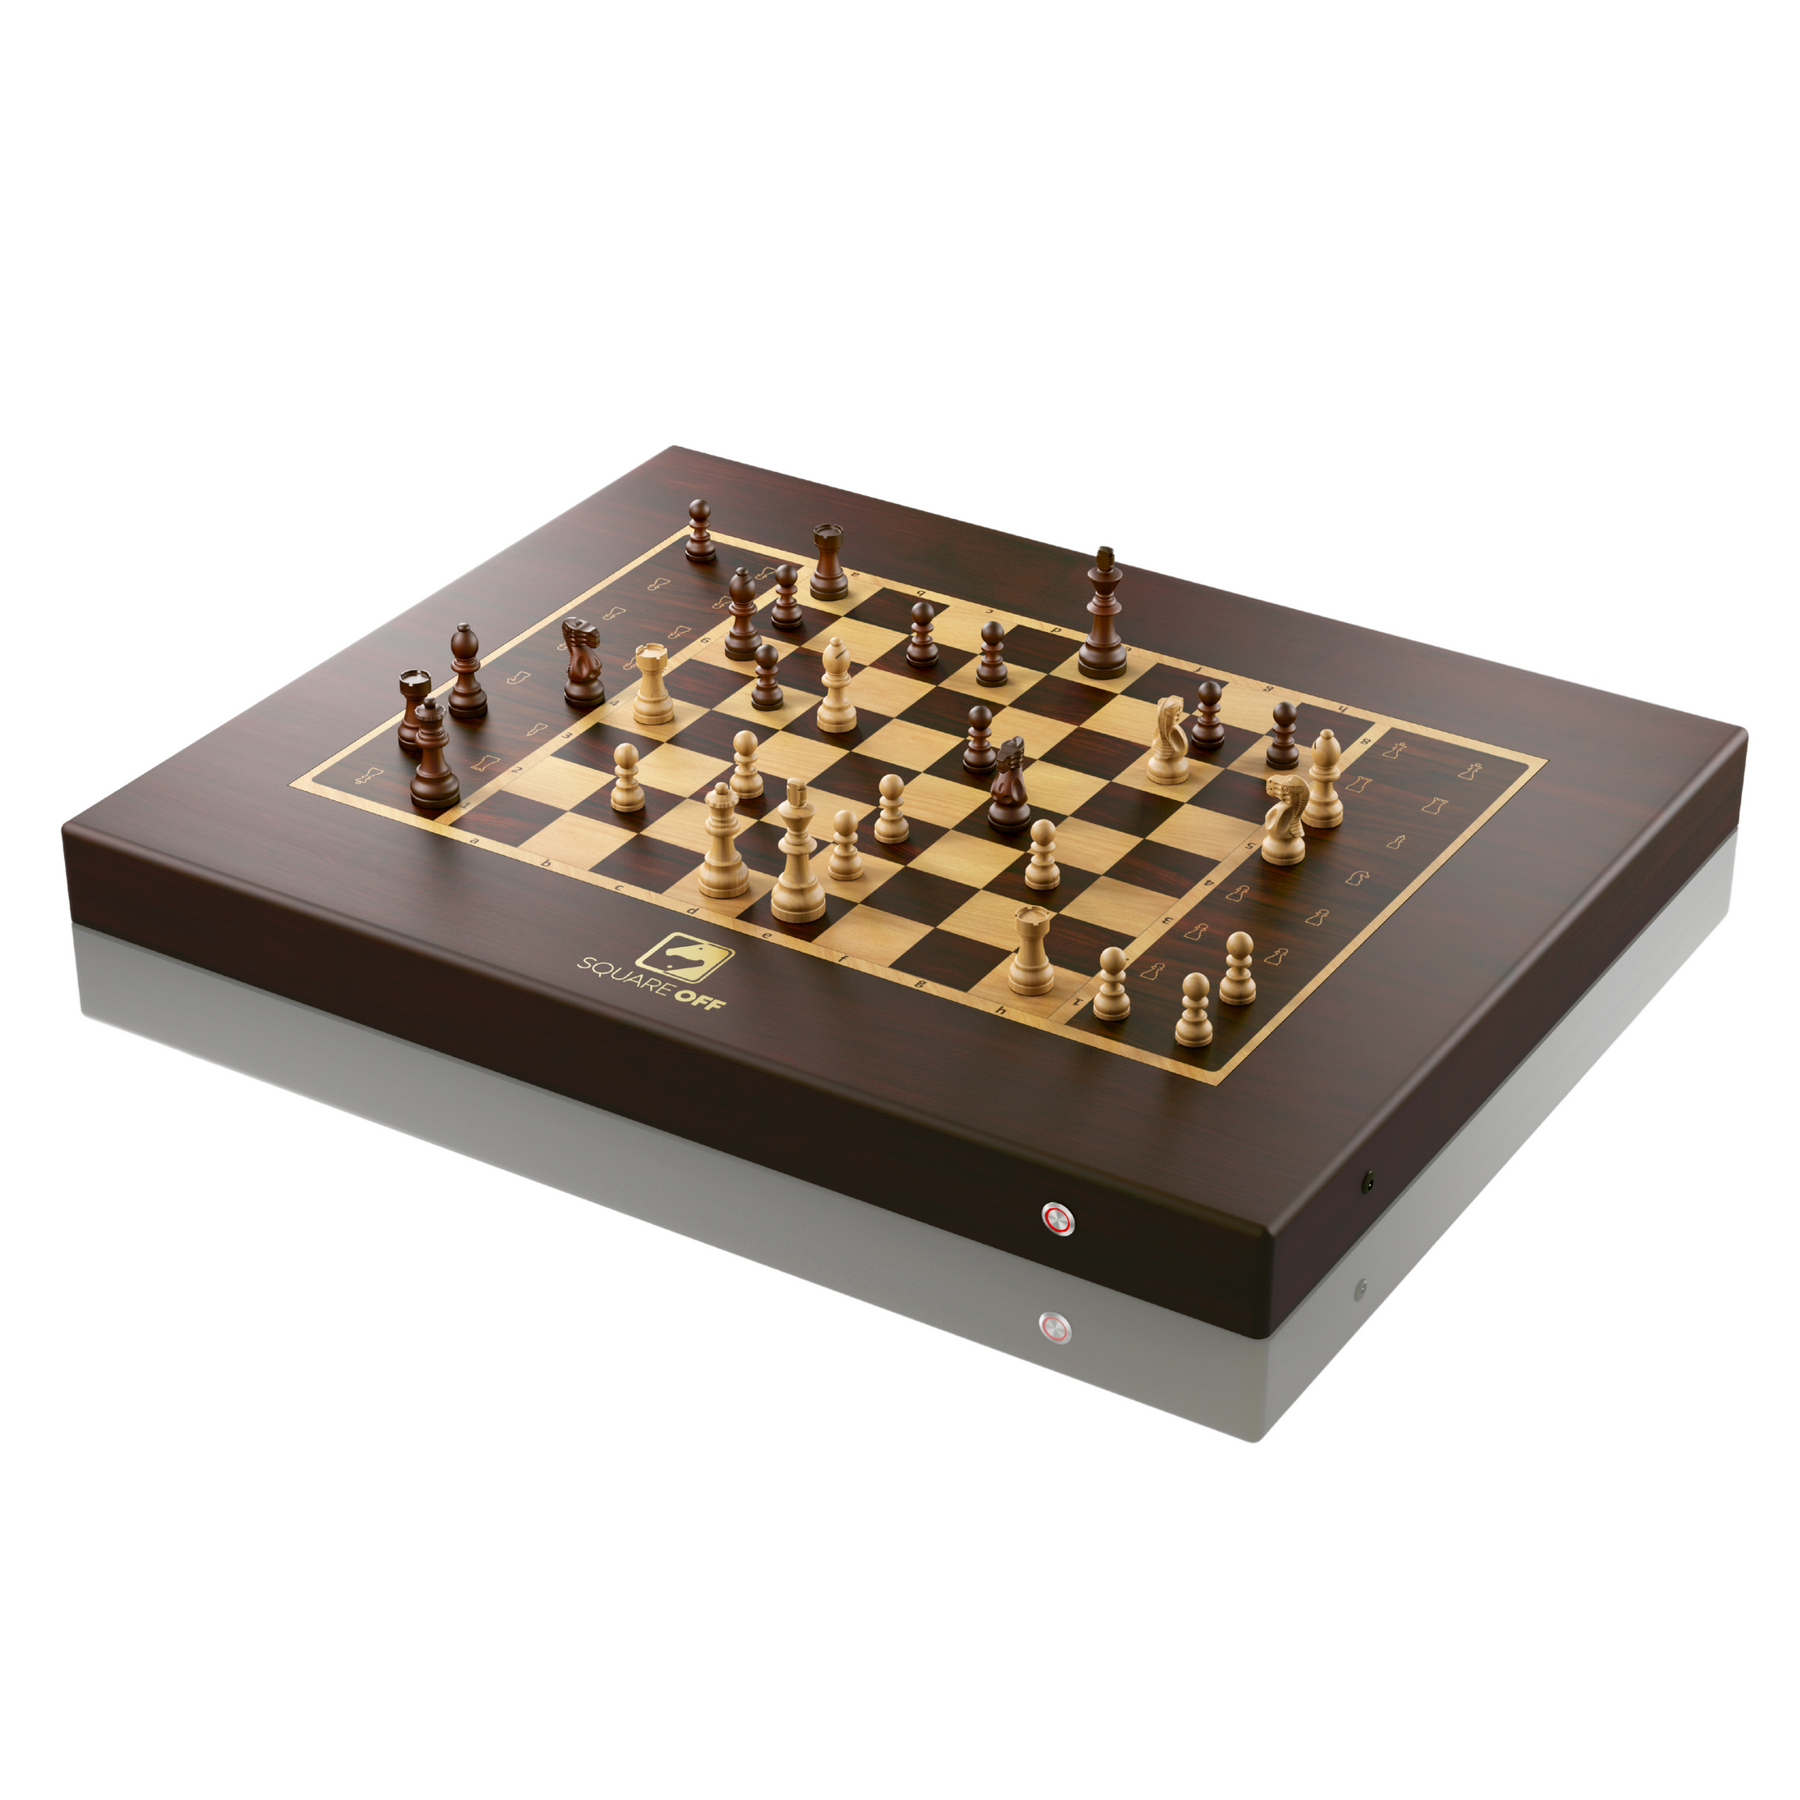 Square Off Grand Kingdom Chess Set - AI Electric Chessboard game